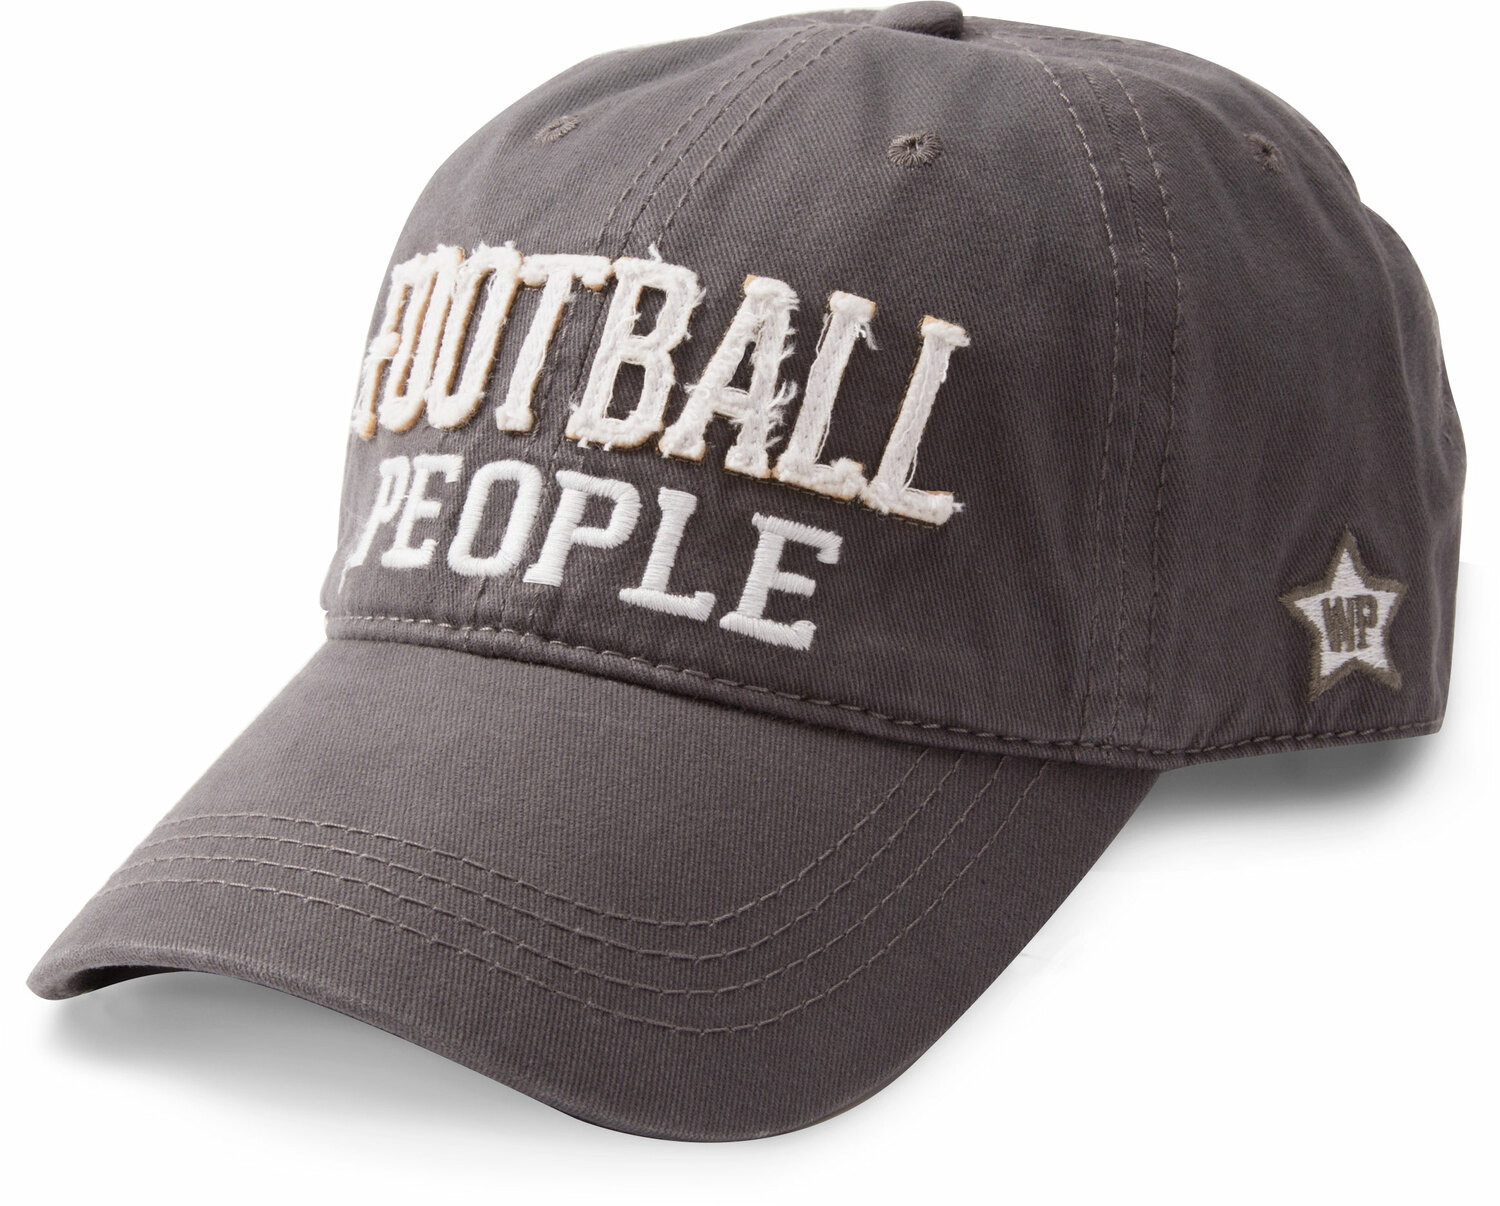 Football People by We People - Football People - Dark Gray Adjustable Hat